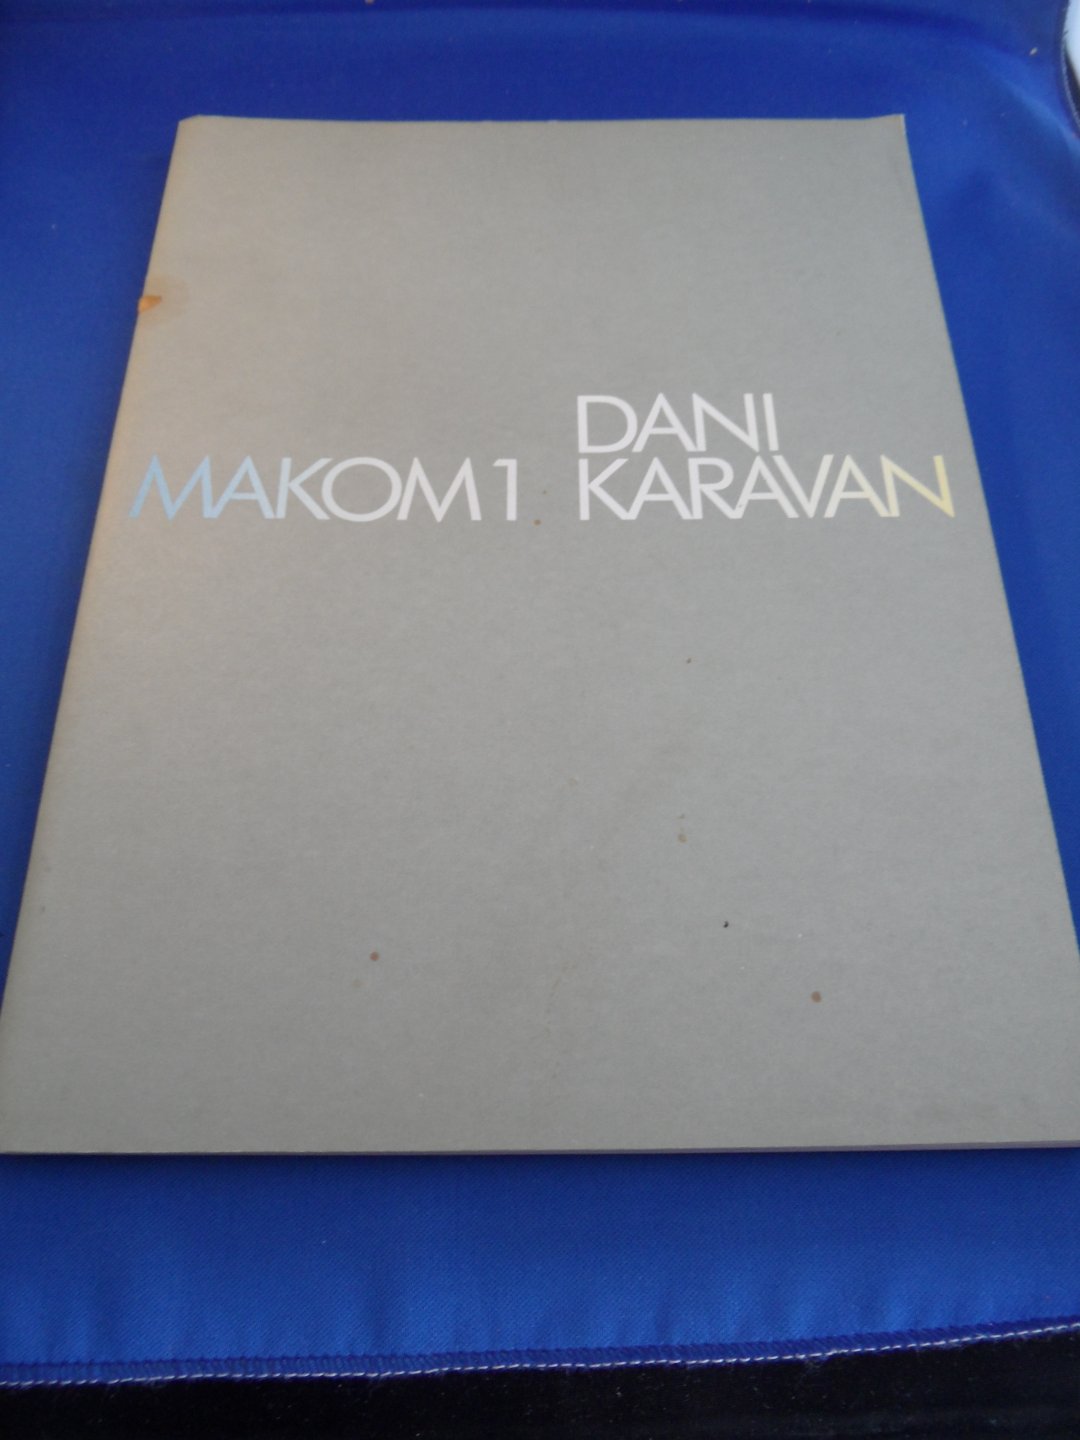 Karavan, Dani - Dani Karavan. Makom 1 met supplement